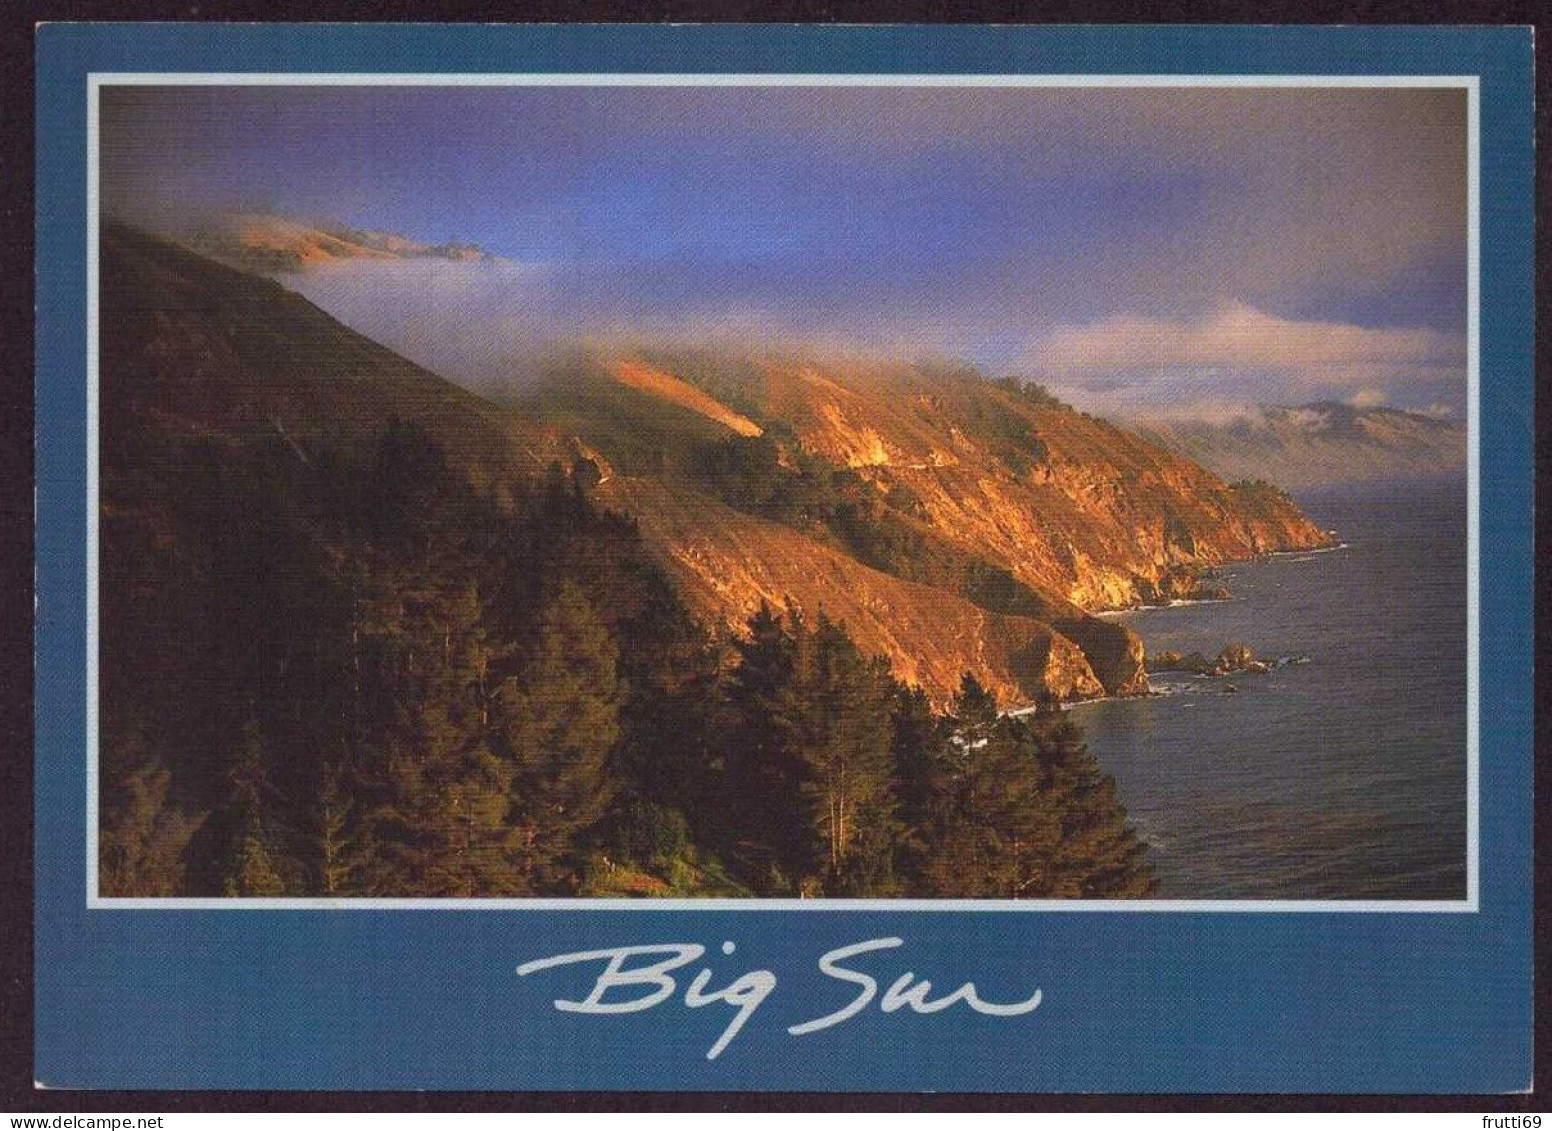 AK 125593 USA - California - Big Sur - Big Sur